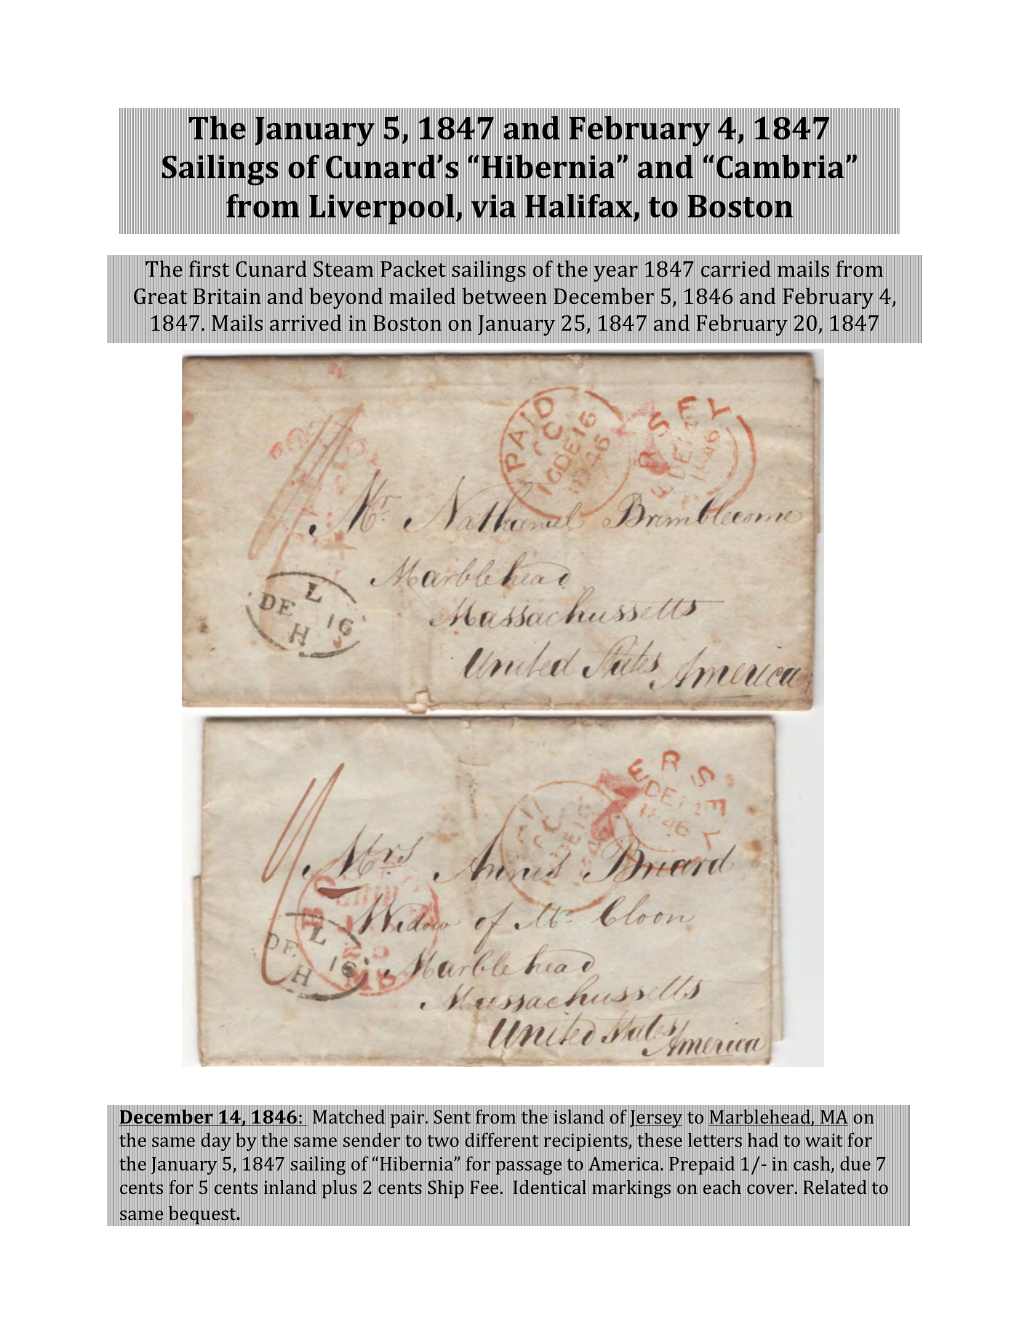 The January 5, 1847 and February 4, 1847 Sailings of Cunard's “Hibernia